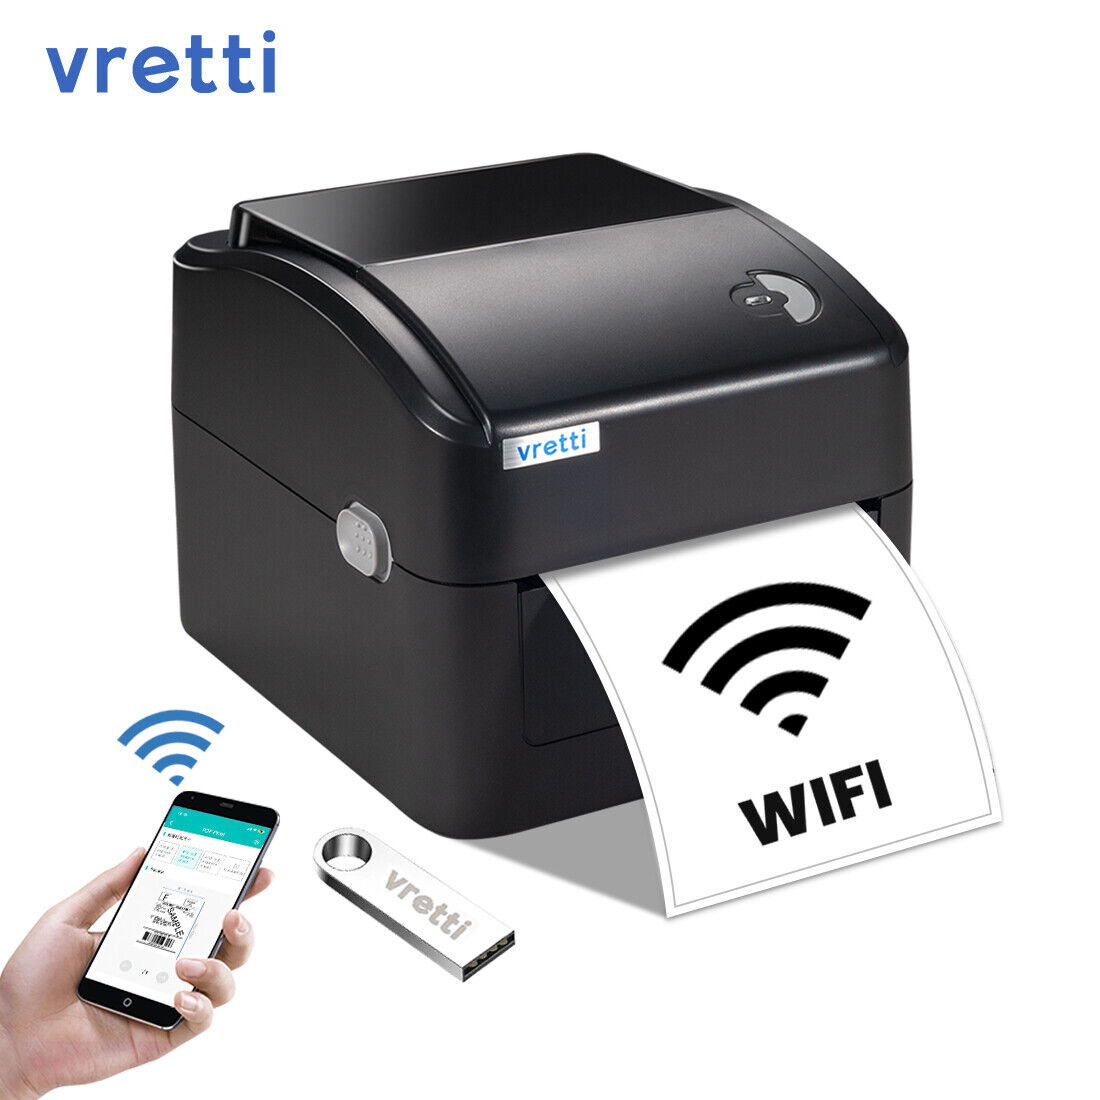 VRETTI Thermal Label Printer 4x6 Wireless Wifi For UPS,USPS,Etsy,eBay